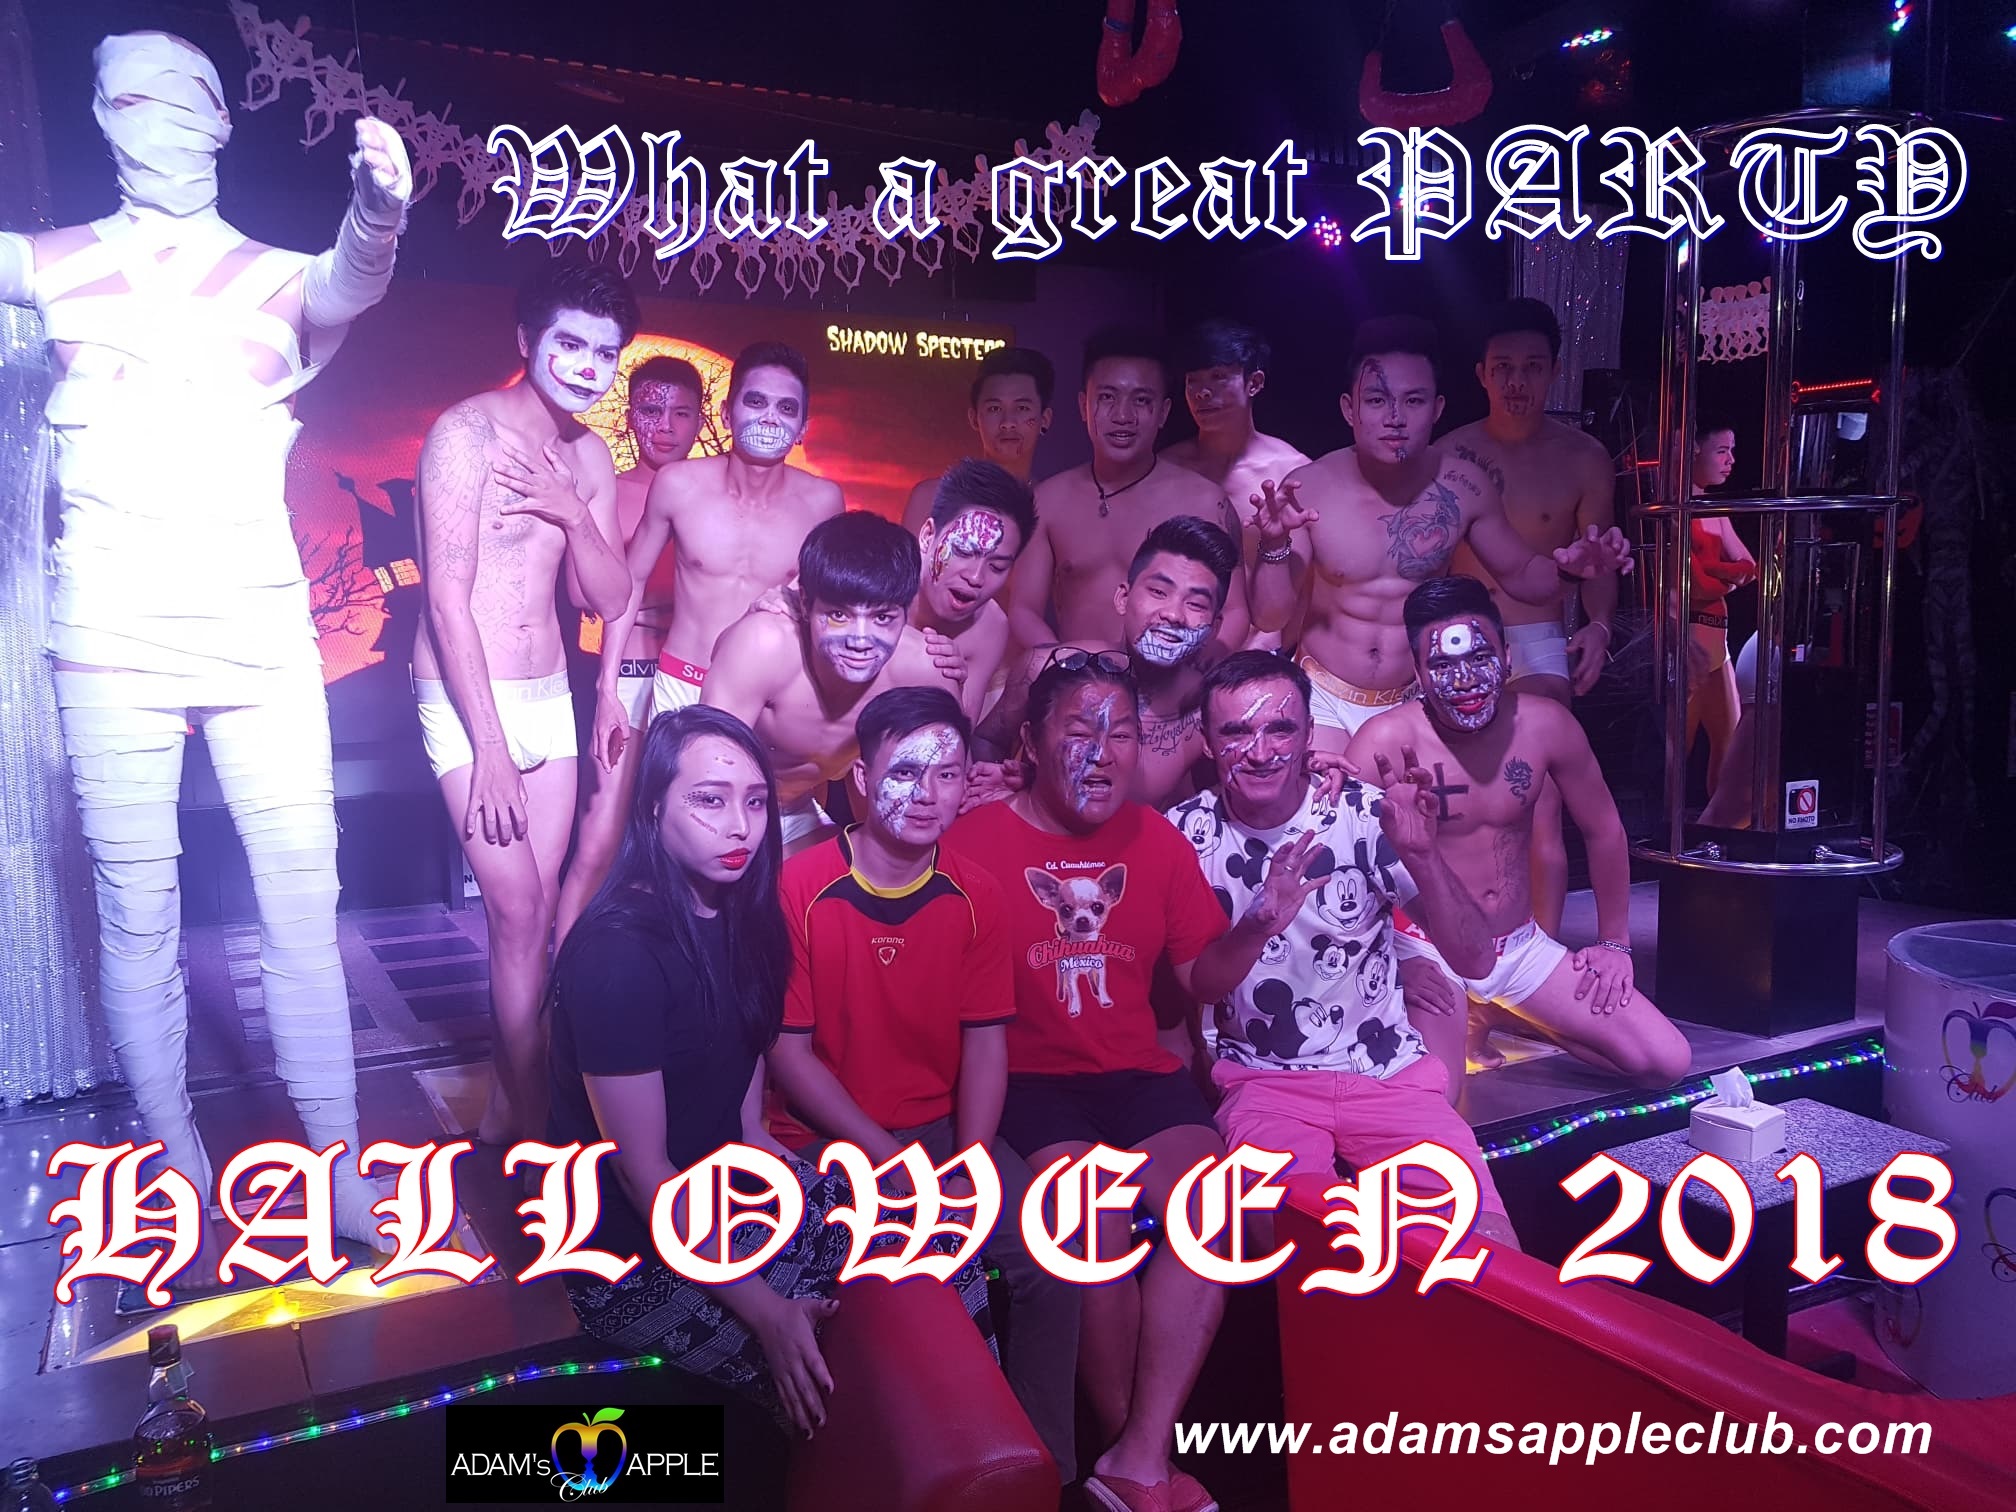 Halloween Adams Apple Club Chiang Mai Boy 